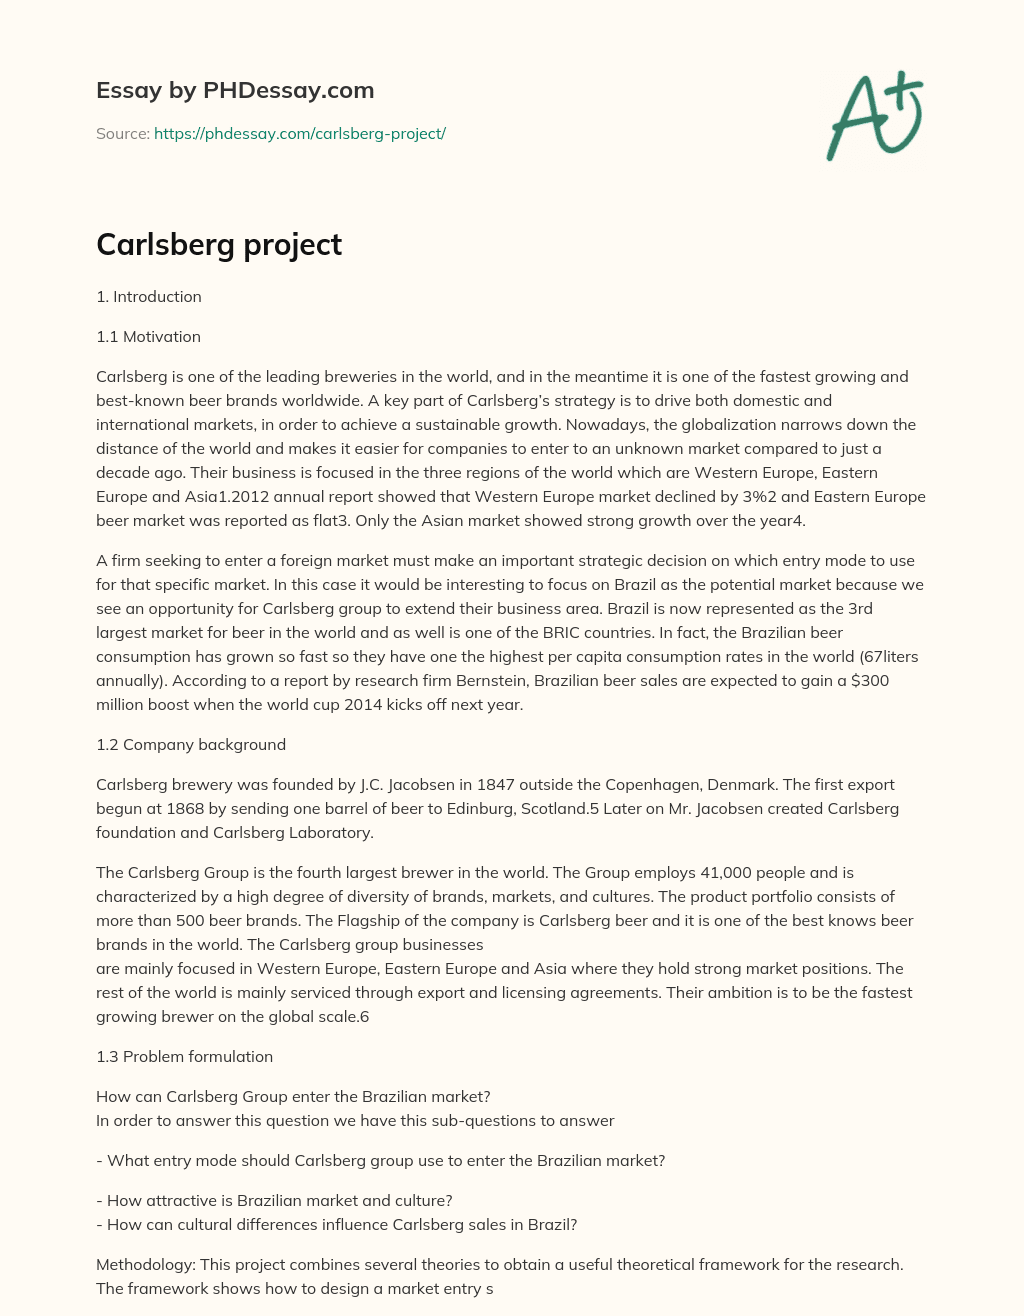 Carlsberg project essay